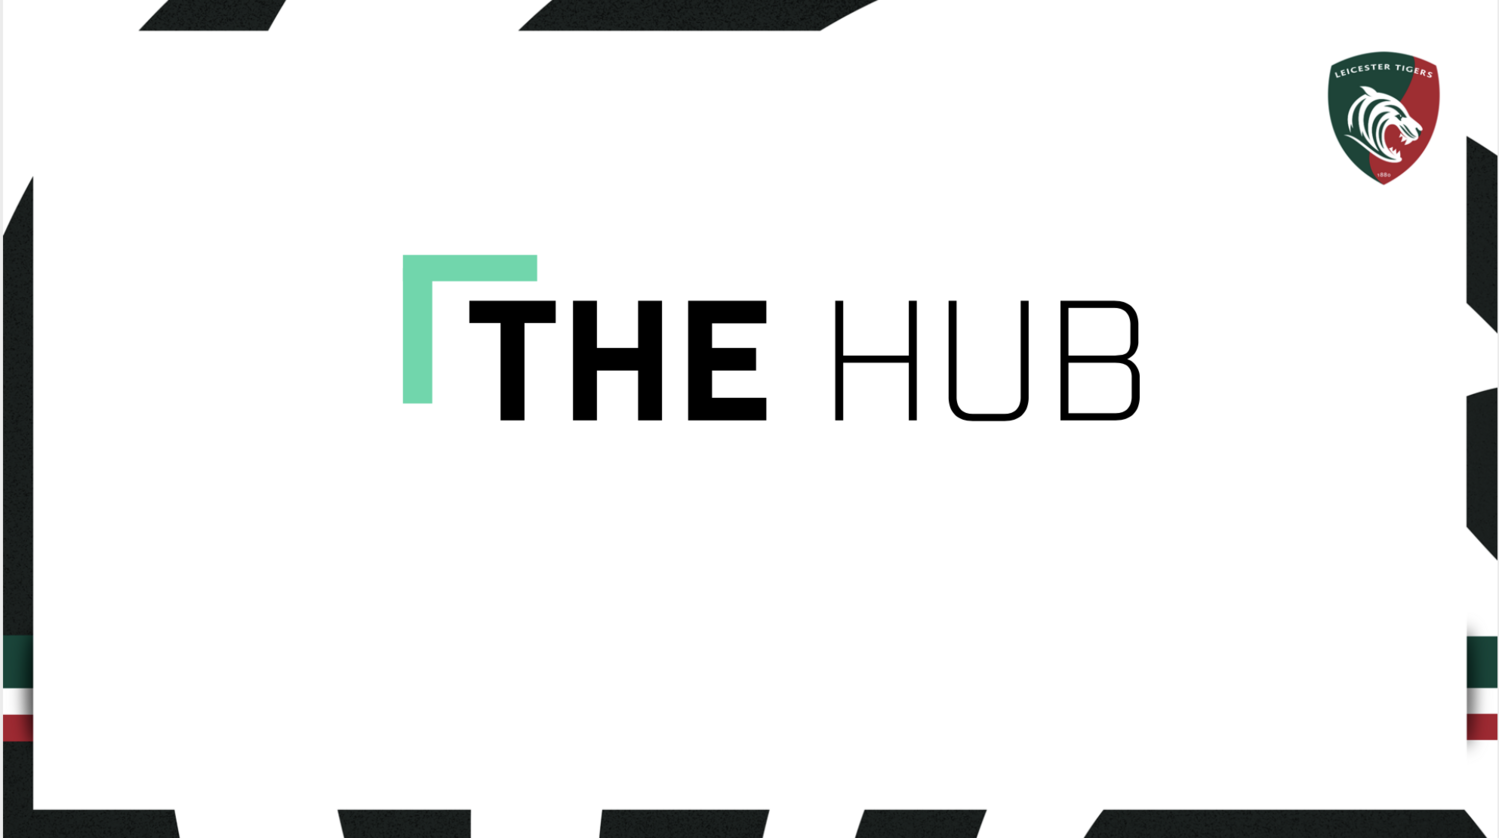 THE Hub